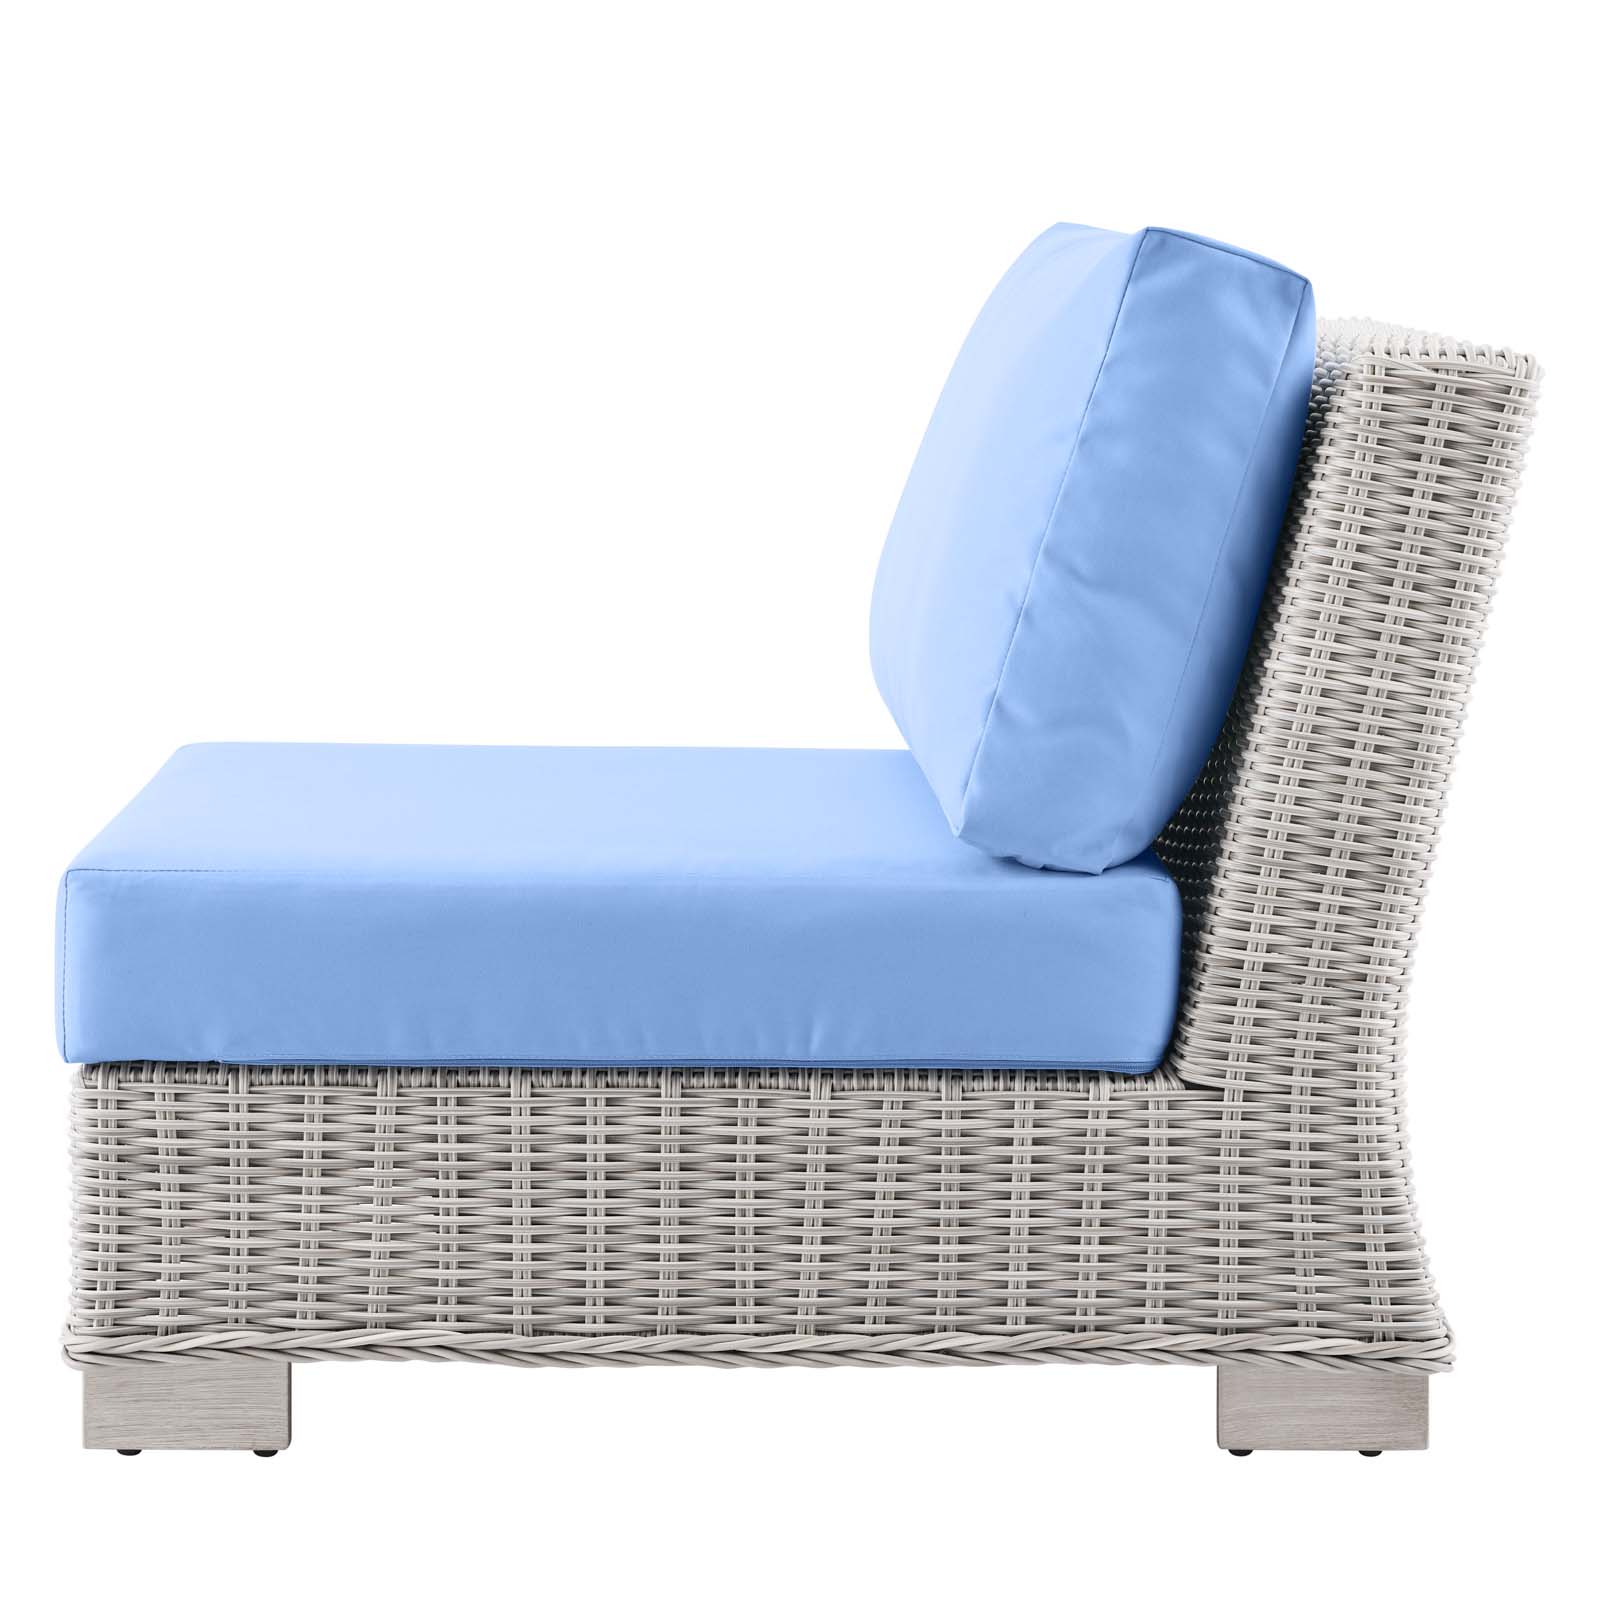 Lounge Sectional Sofa Chair Set, Rattan, Wicker, Light Grey Gray Light Blue, Modern Contemporary Urban Design, Outdoor Patio Balcony Cafe Bistro Garden Furniture Hotel Hospitality - image 4 of 10